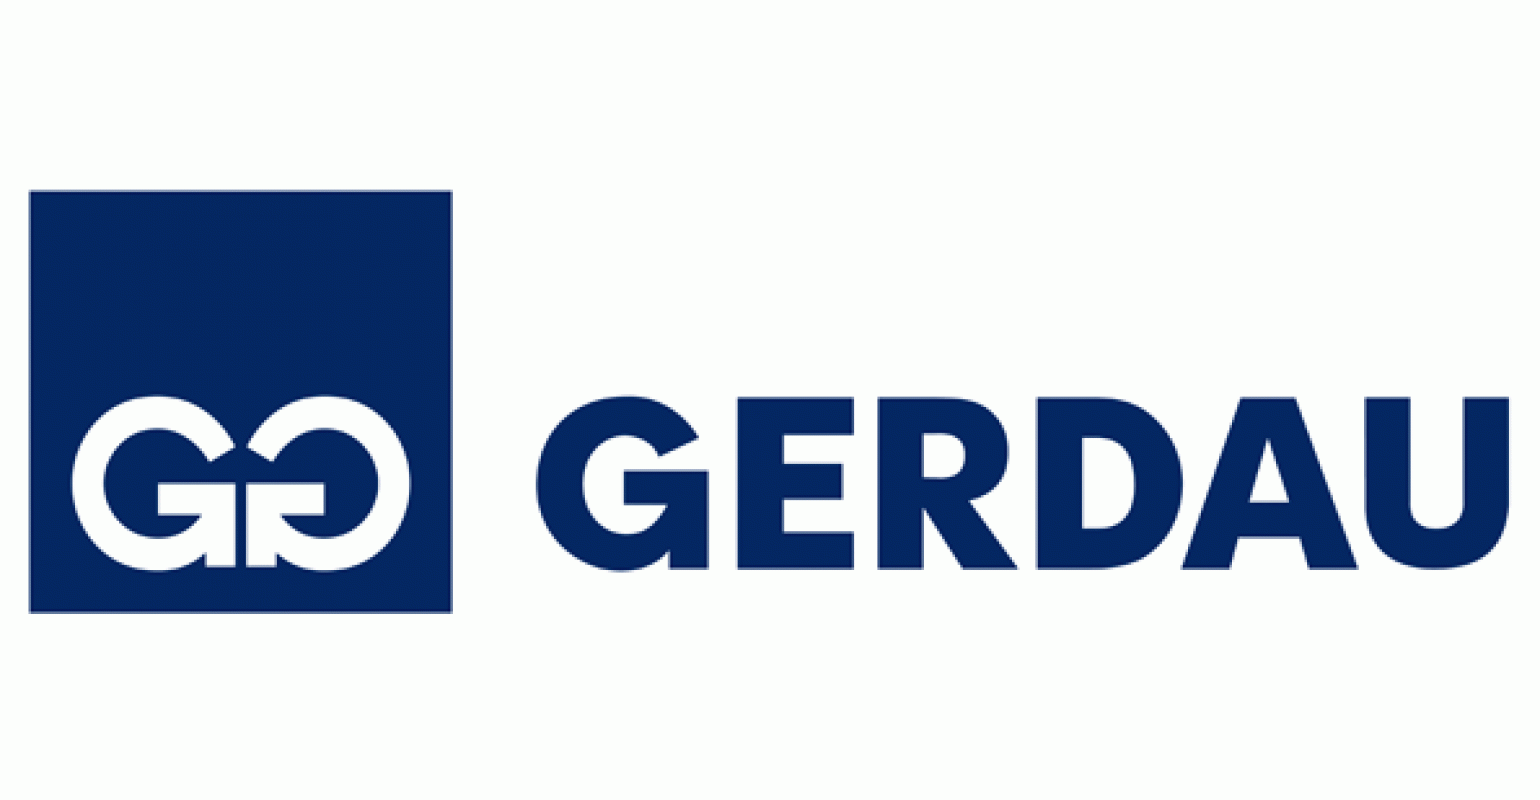 Gerdau signs strategic partnership with Primetals Technologies for their digitalization journey at METEC